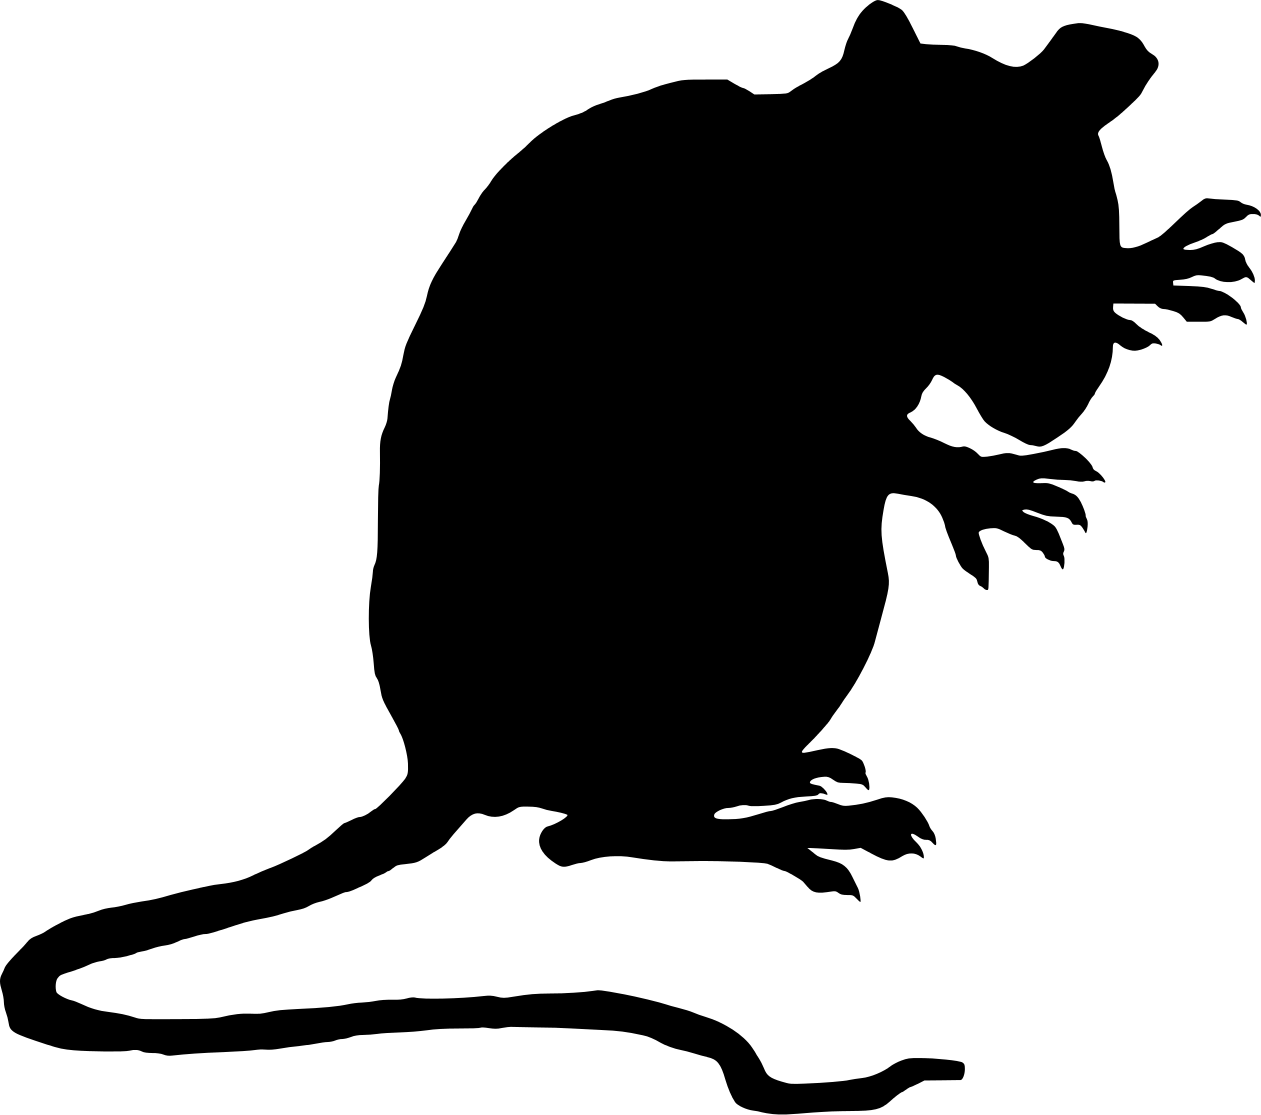 Rat silhouette clipart.